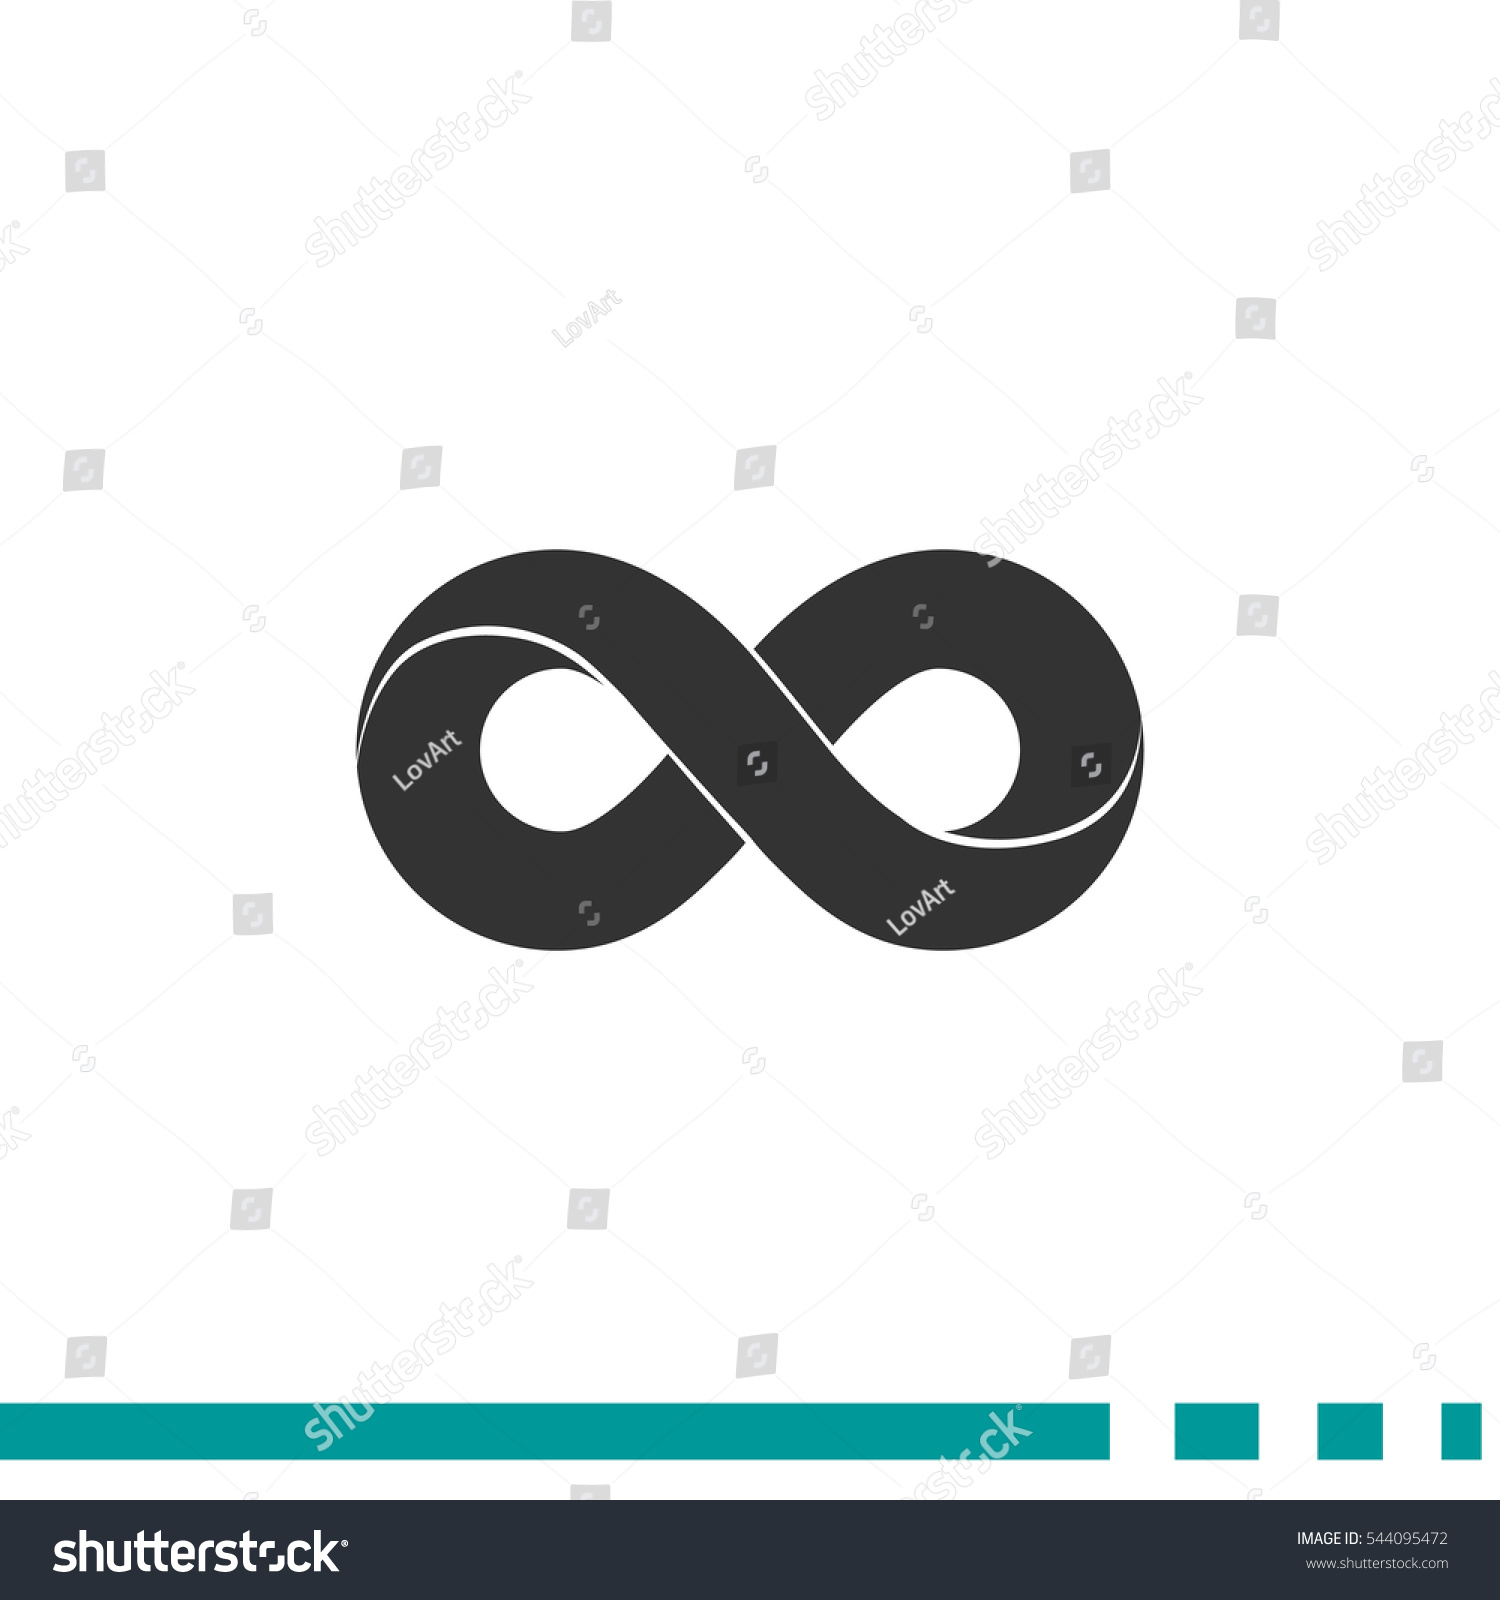 Infinity Icon Vector. - 544095472 : Shutterstock